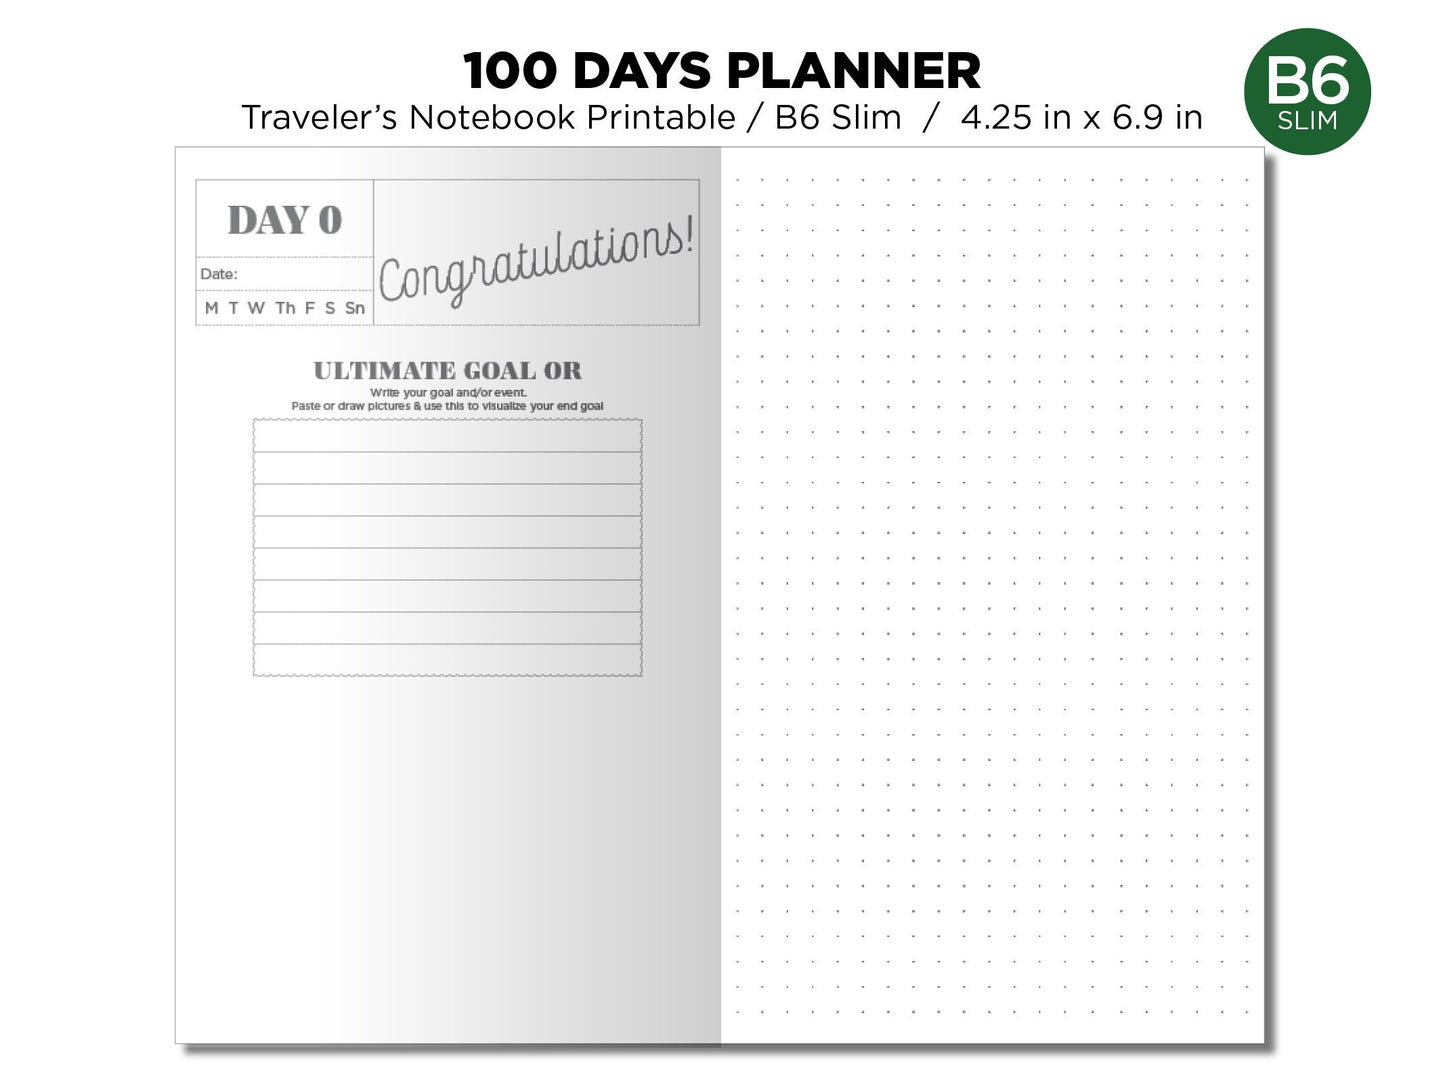 B6 Slim 100 Days Planner Traveler's Notebook 100 Days  Goal Tracking CountDown Planner Printable Diary Refill